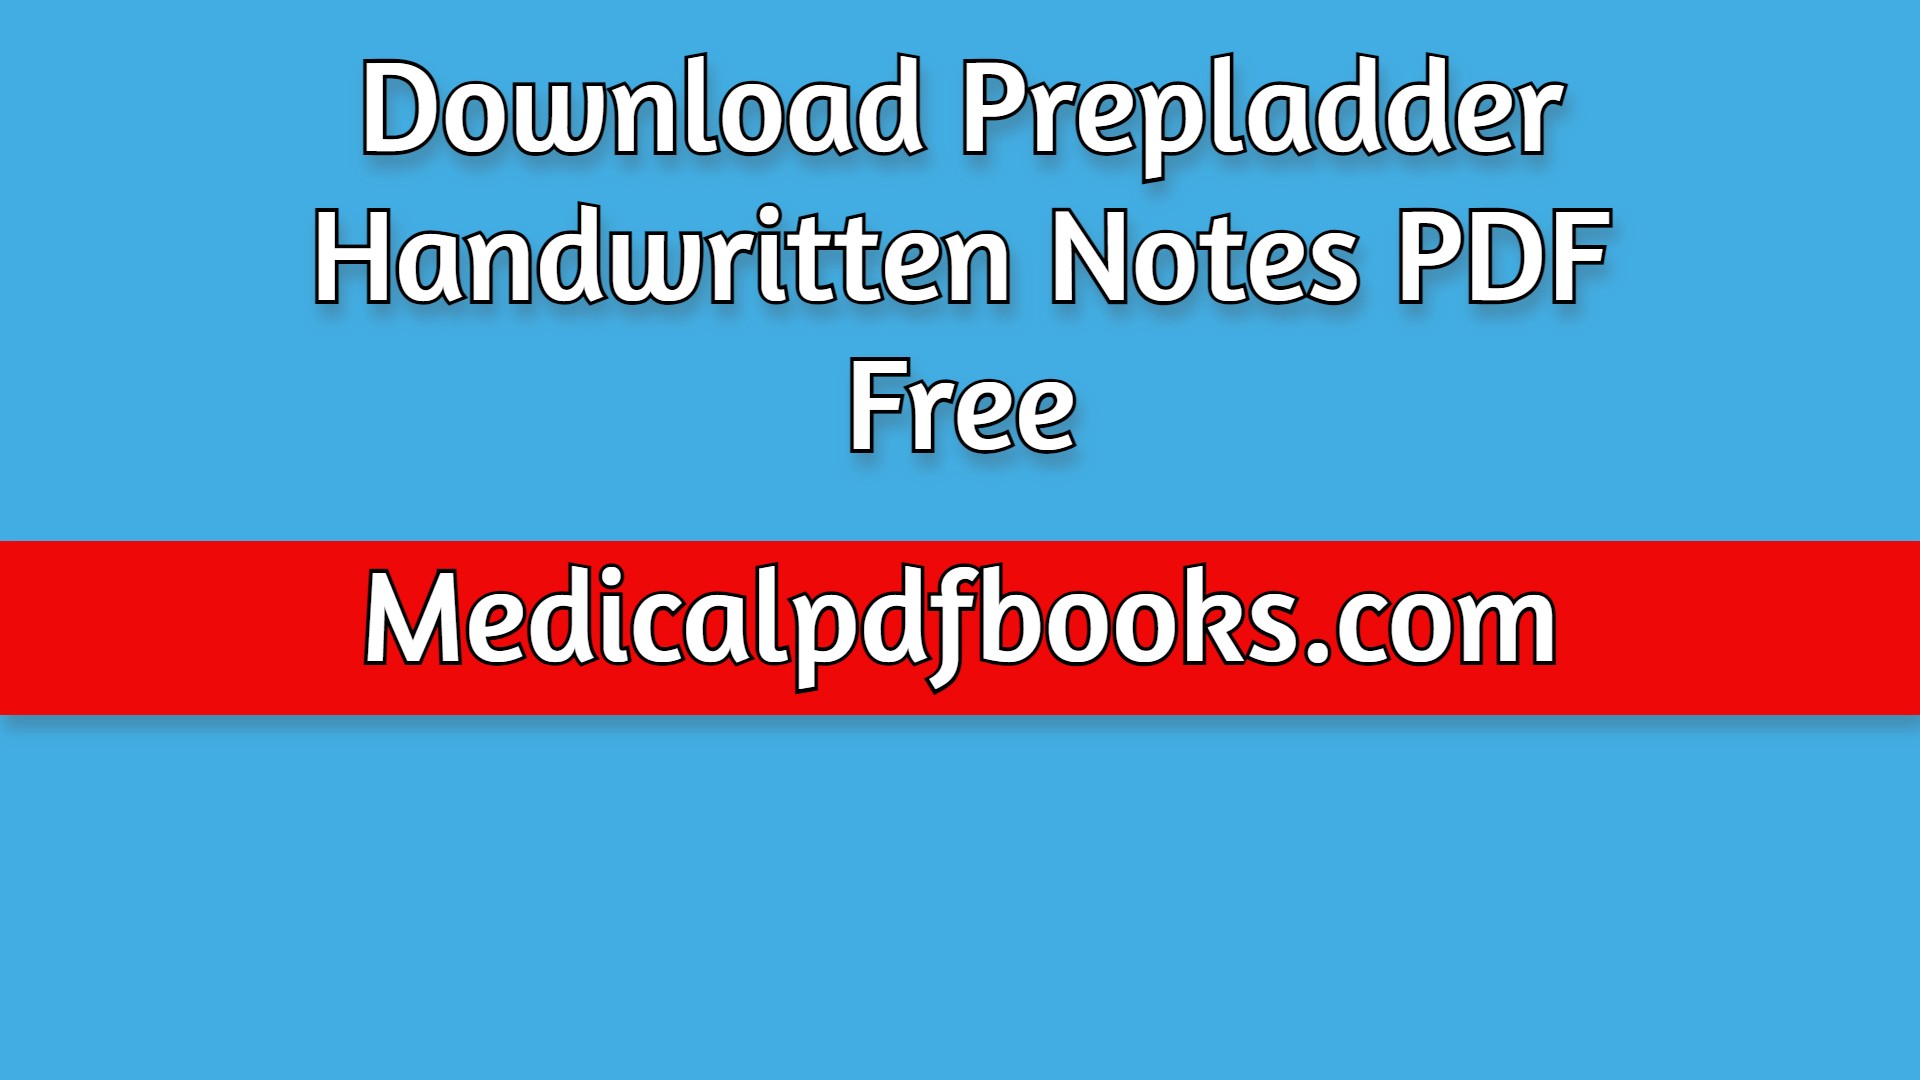 Download Prepladder Handwritten Notes 2021 PDF Free